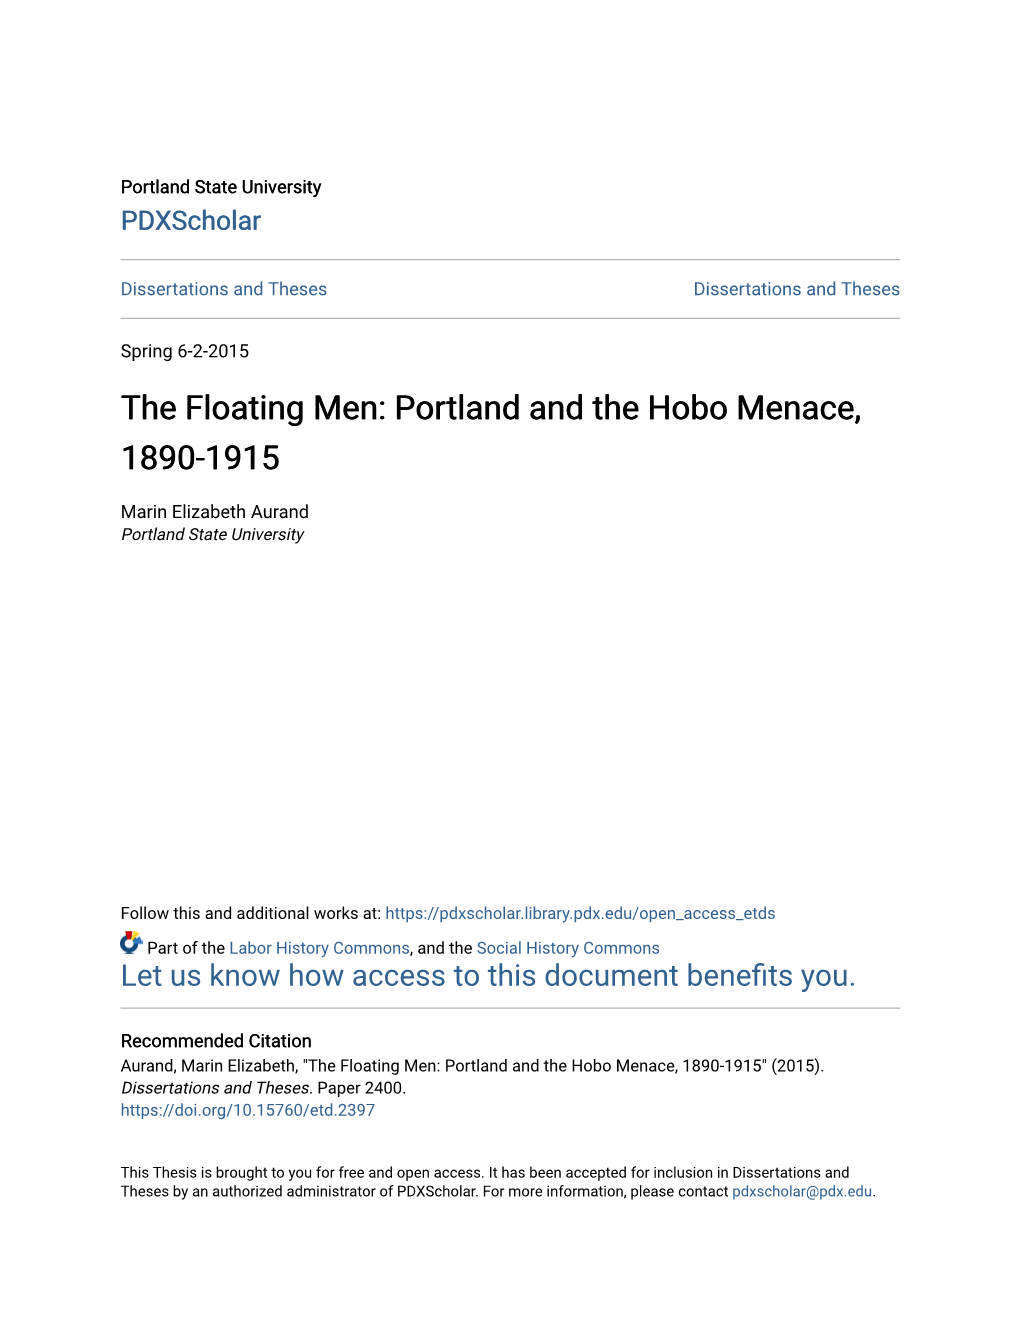 Portland and the Hobo Menace, 1890-1915